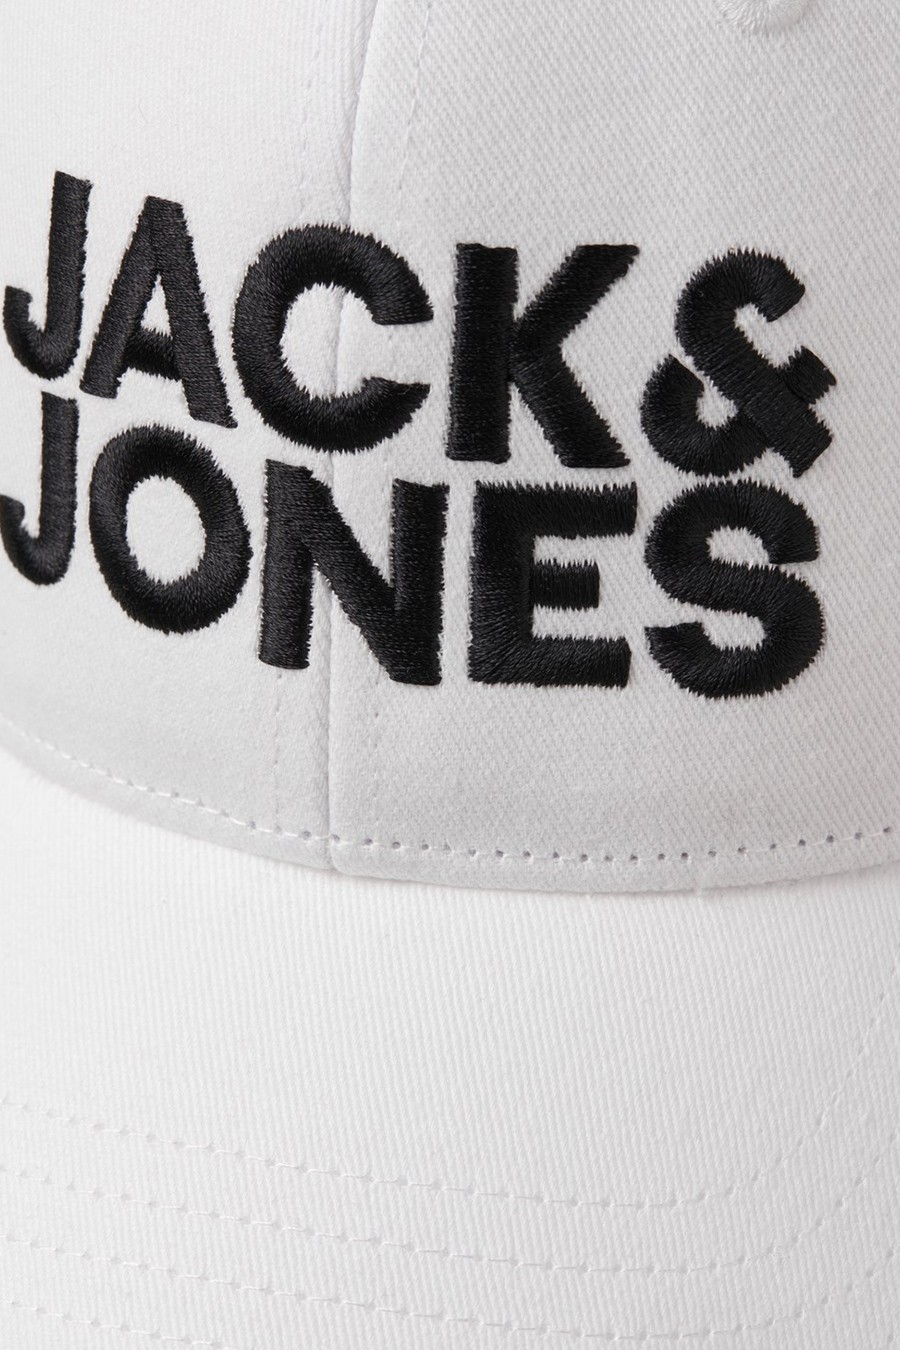 Hat JACK & JONES 12254296-White